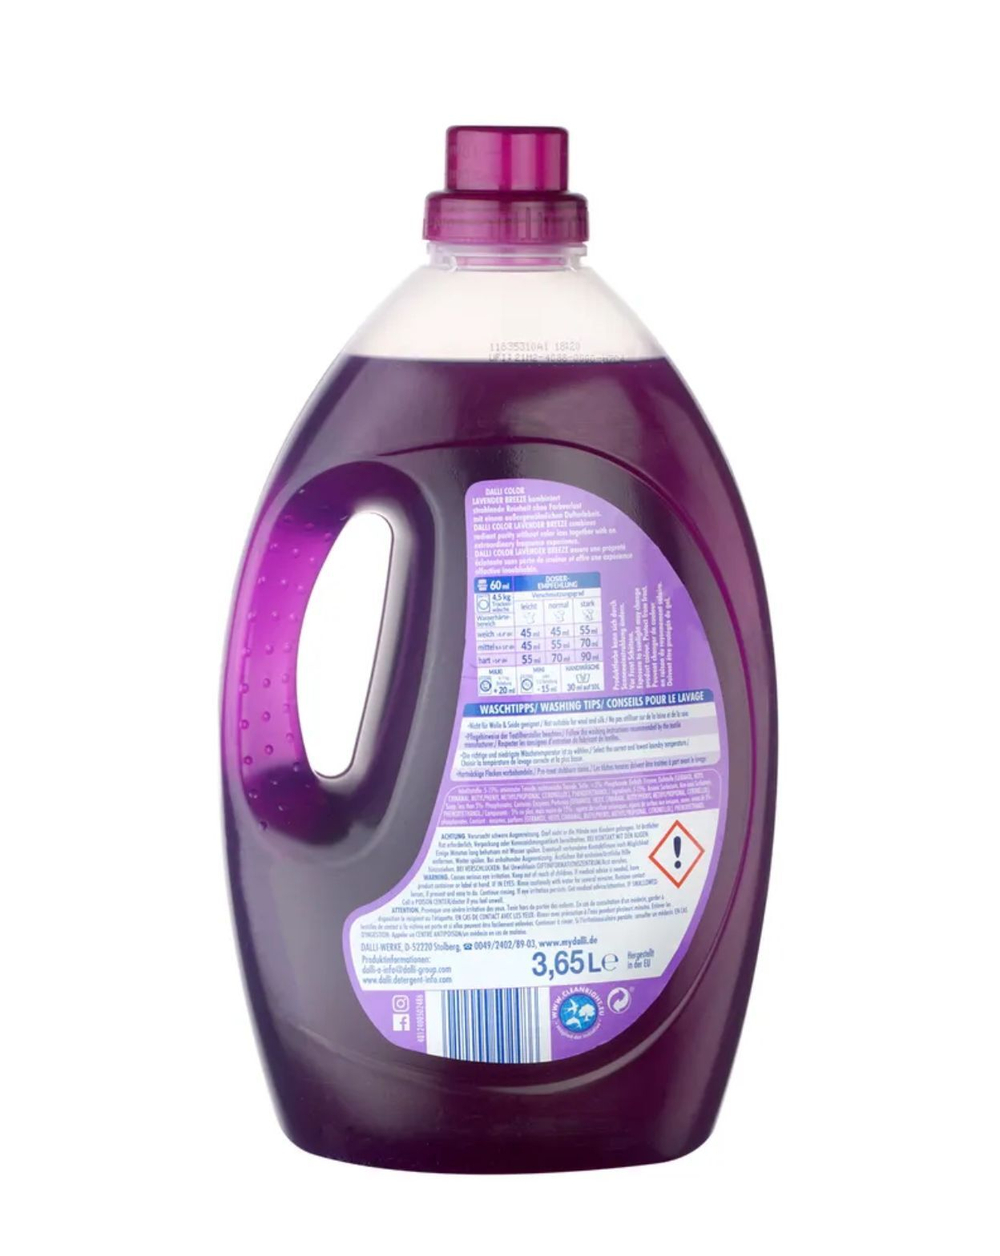 Жидкое средство для стирки Dalli Lavender Breeze 66 стирок 3,65 л